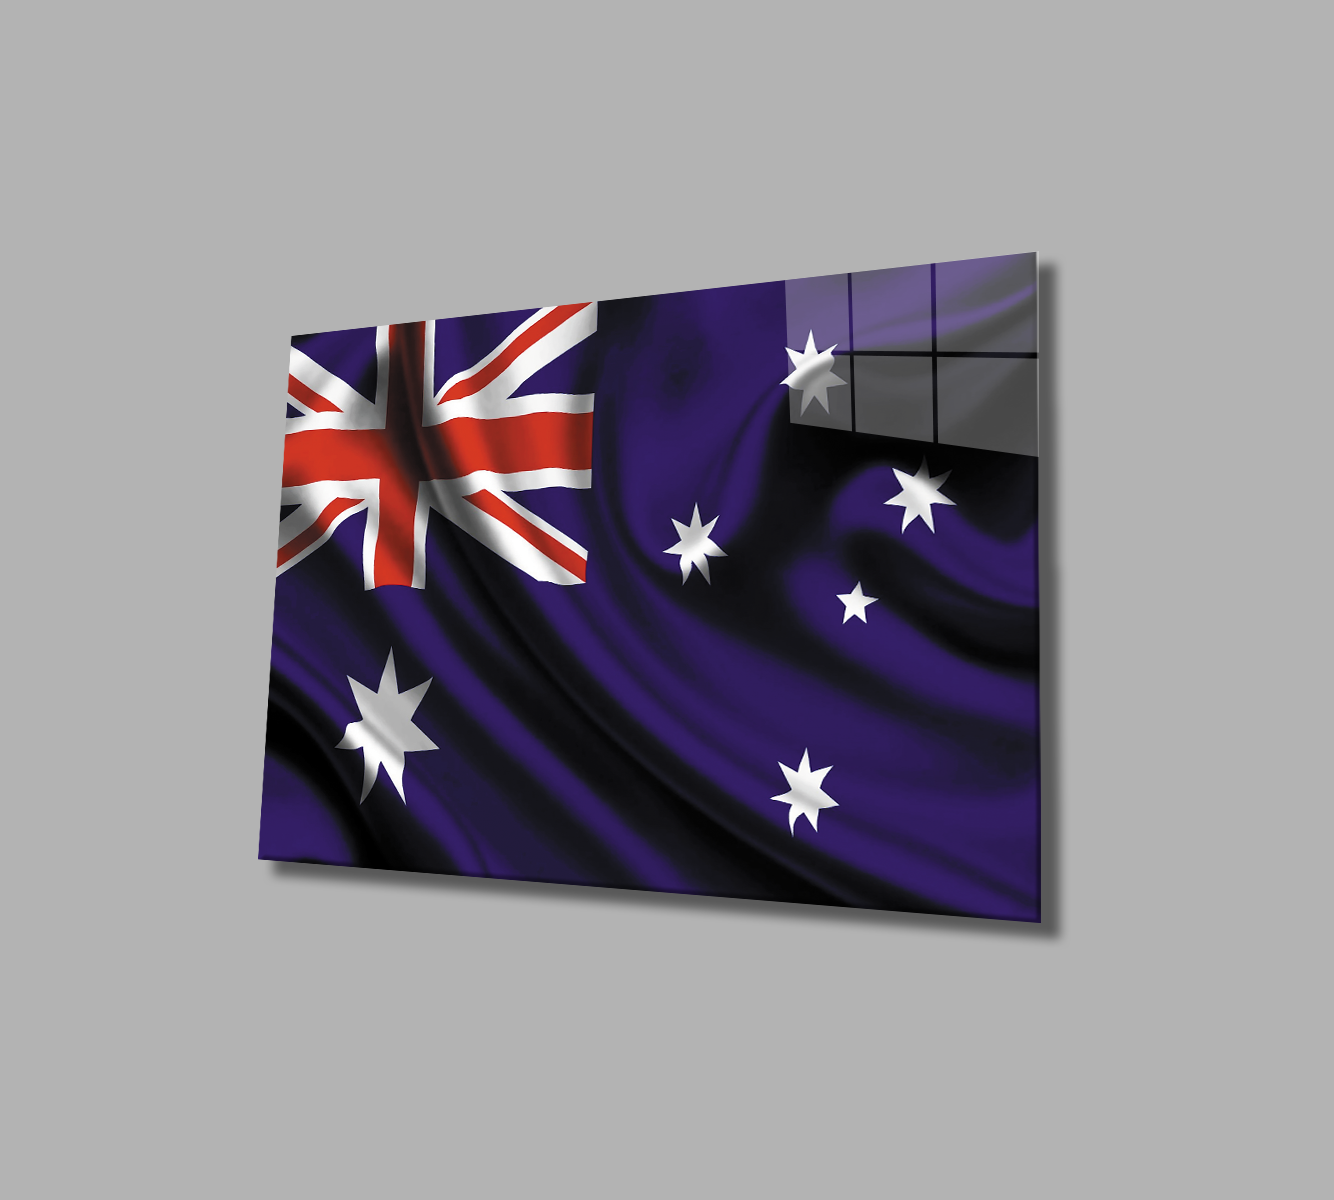 Dalgalanan Avustralya Bayrağı Cam Tablo  4mm Dayanıklı Temperli Cam, Waving Australian Flag Glass Wall Art